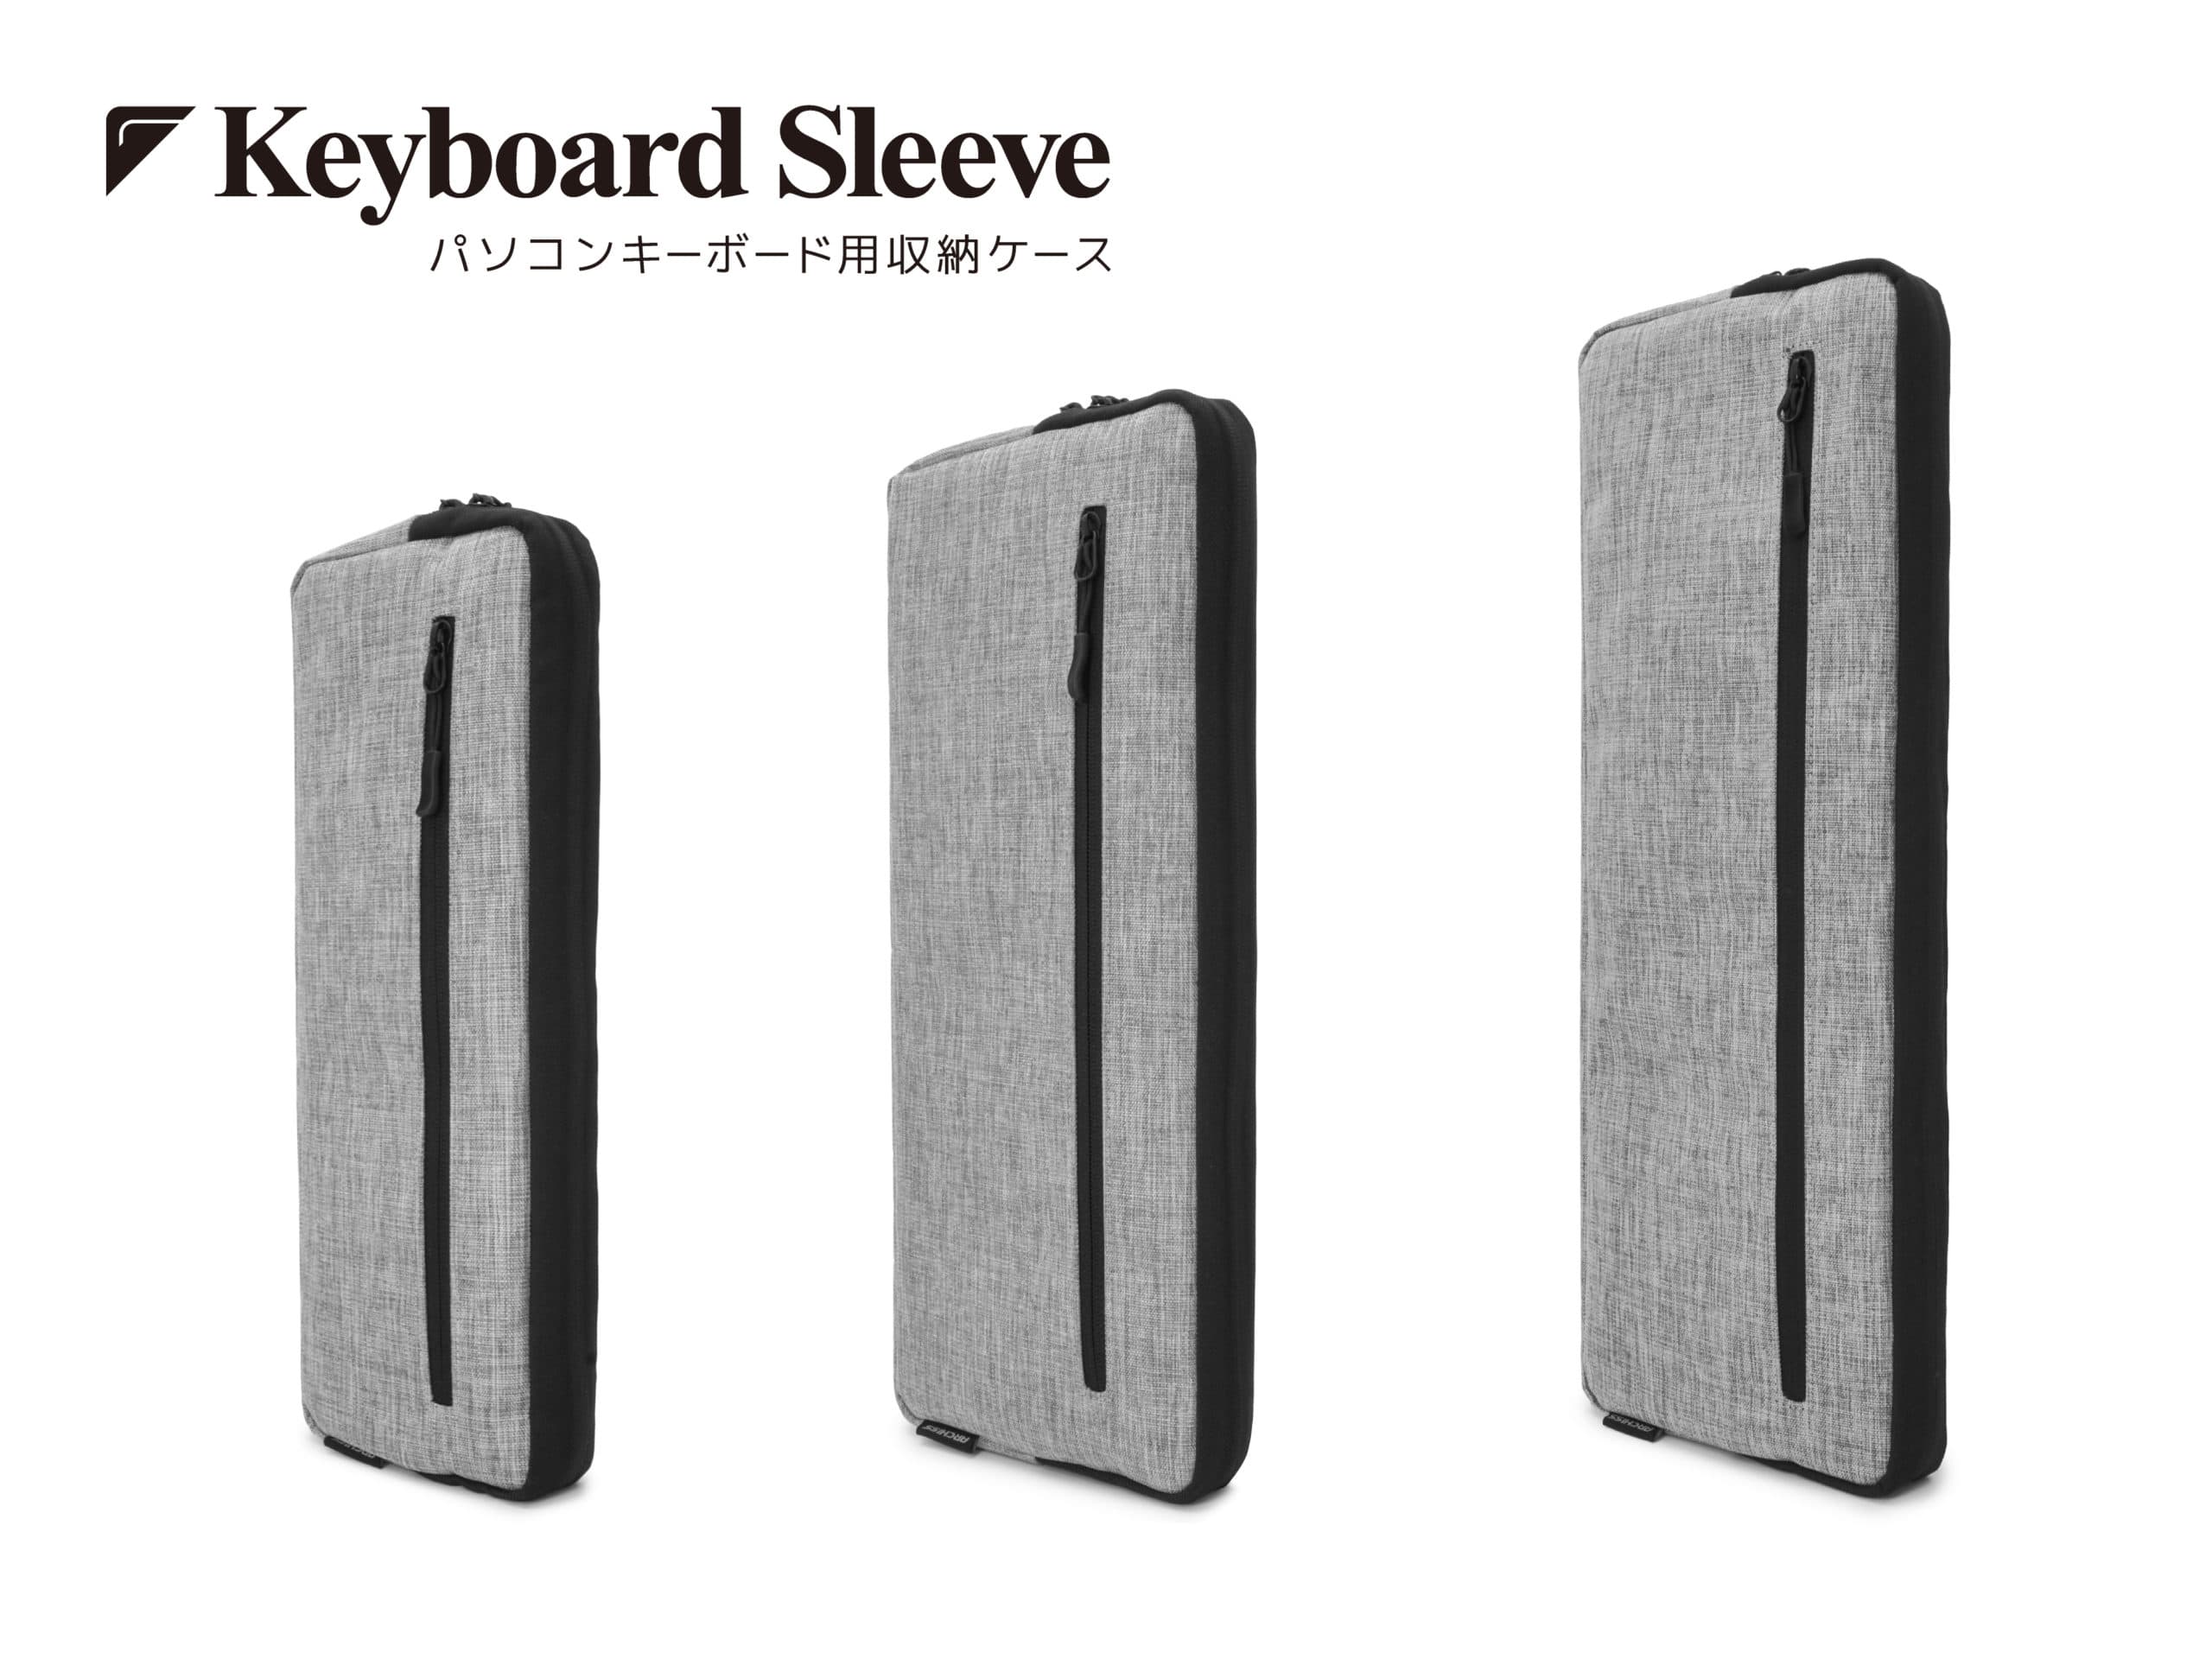 Keyboard Sleeve - ARCHISS キーボードスリーブ - 株式会社アーキサイト